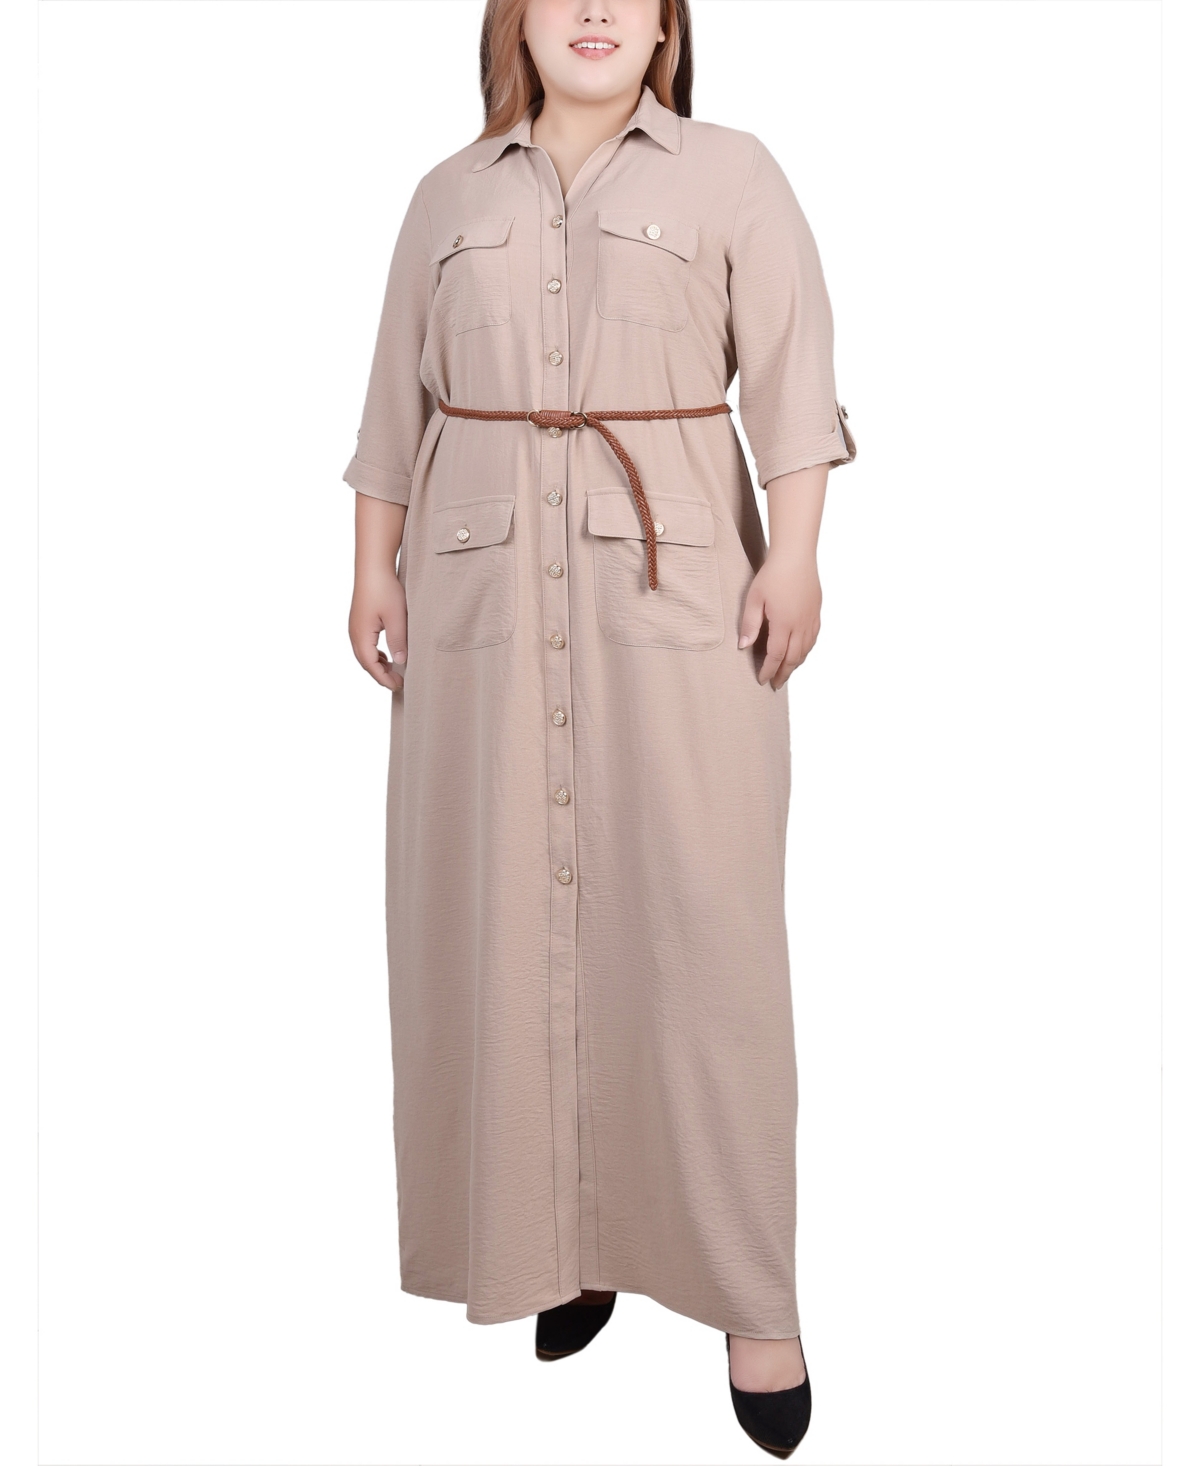 Plus Size 3/4 Sleeve Safari Style Belted Shirt Dress - Oxford Tan